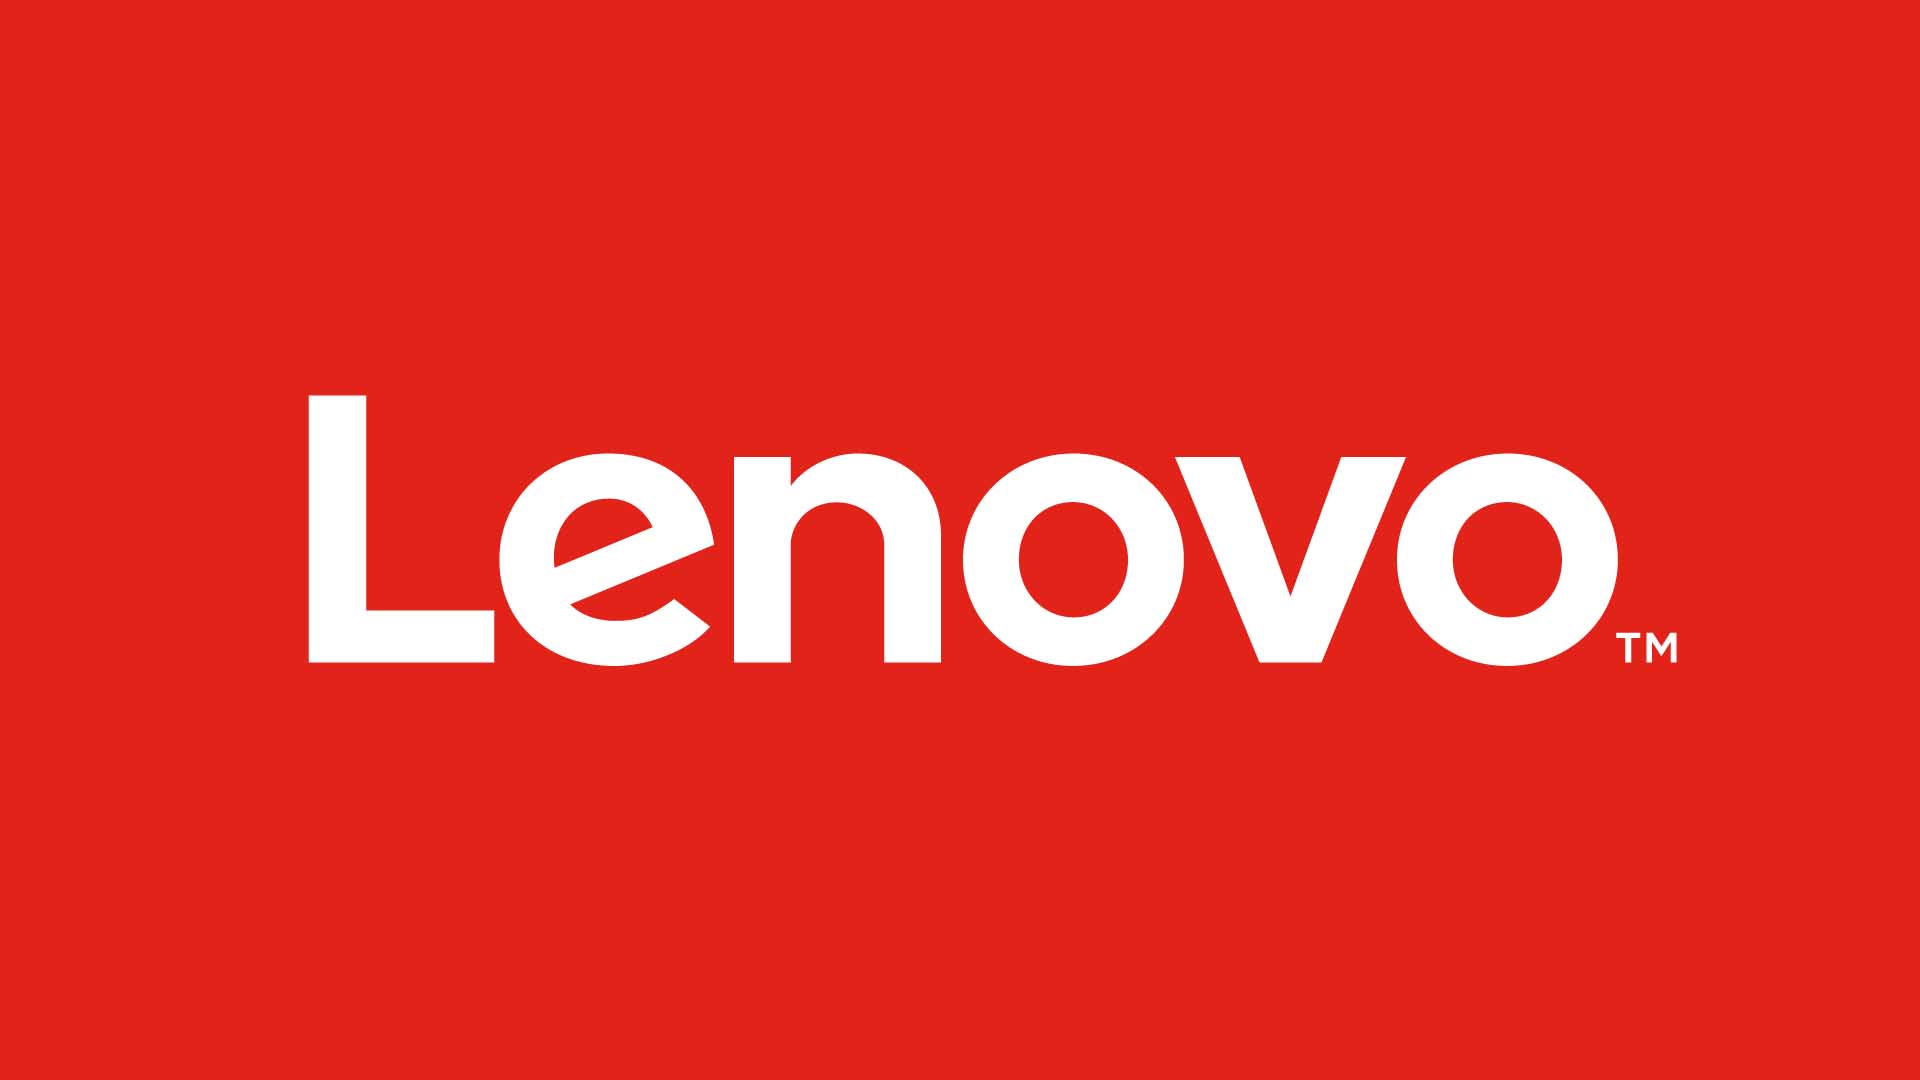 Lenovo Mobile Logo Symbol Vectors Free Download Lenovo Logo 19x1080 Wallpaper Teahub Io